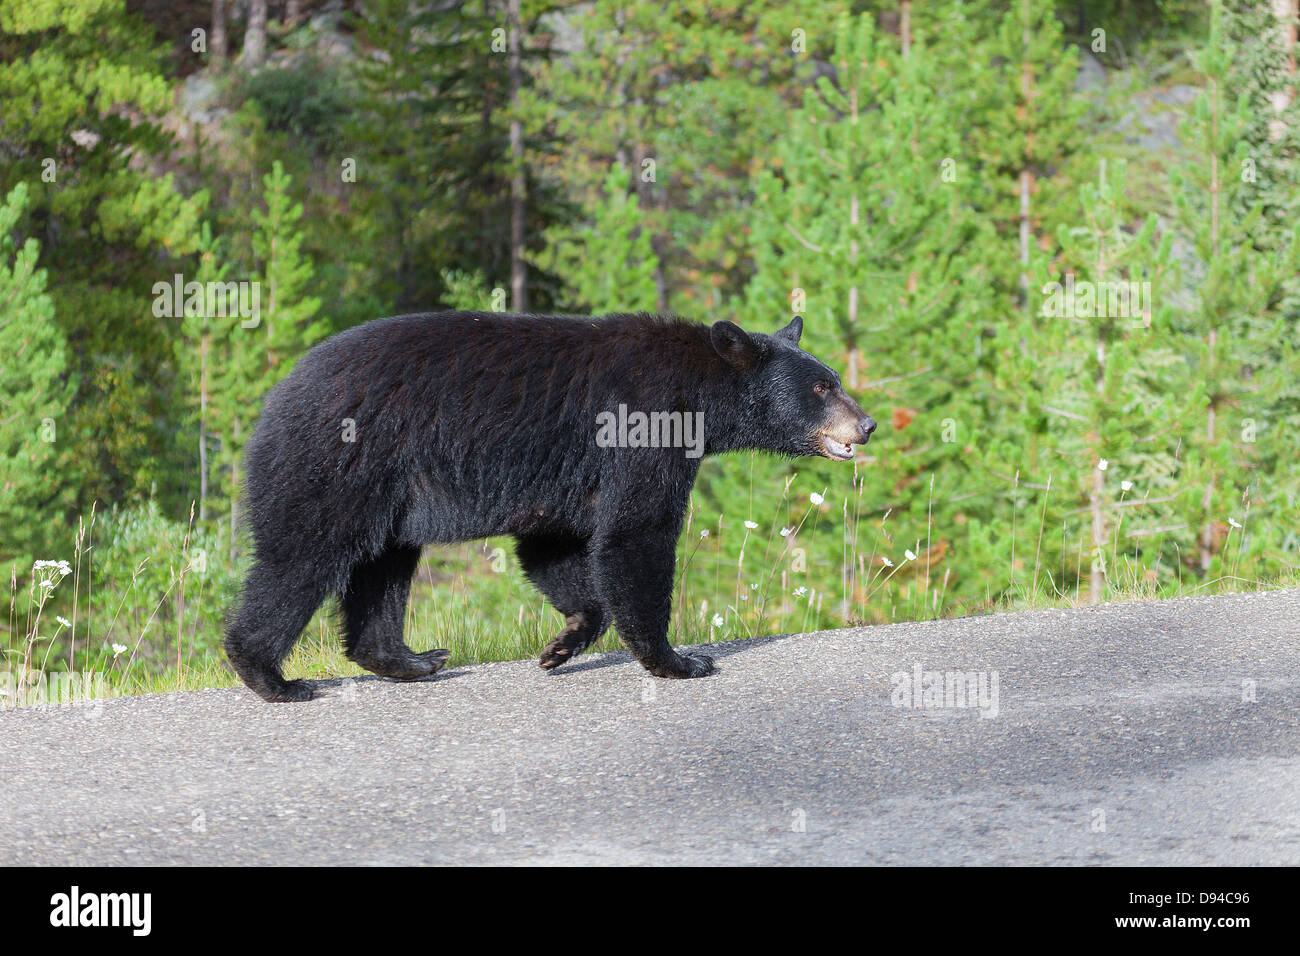 American black bear walking through forest Stock Photo